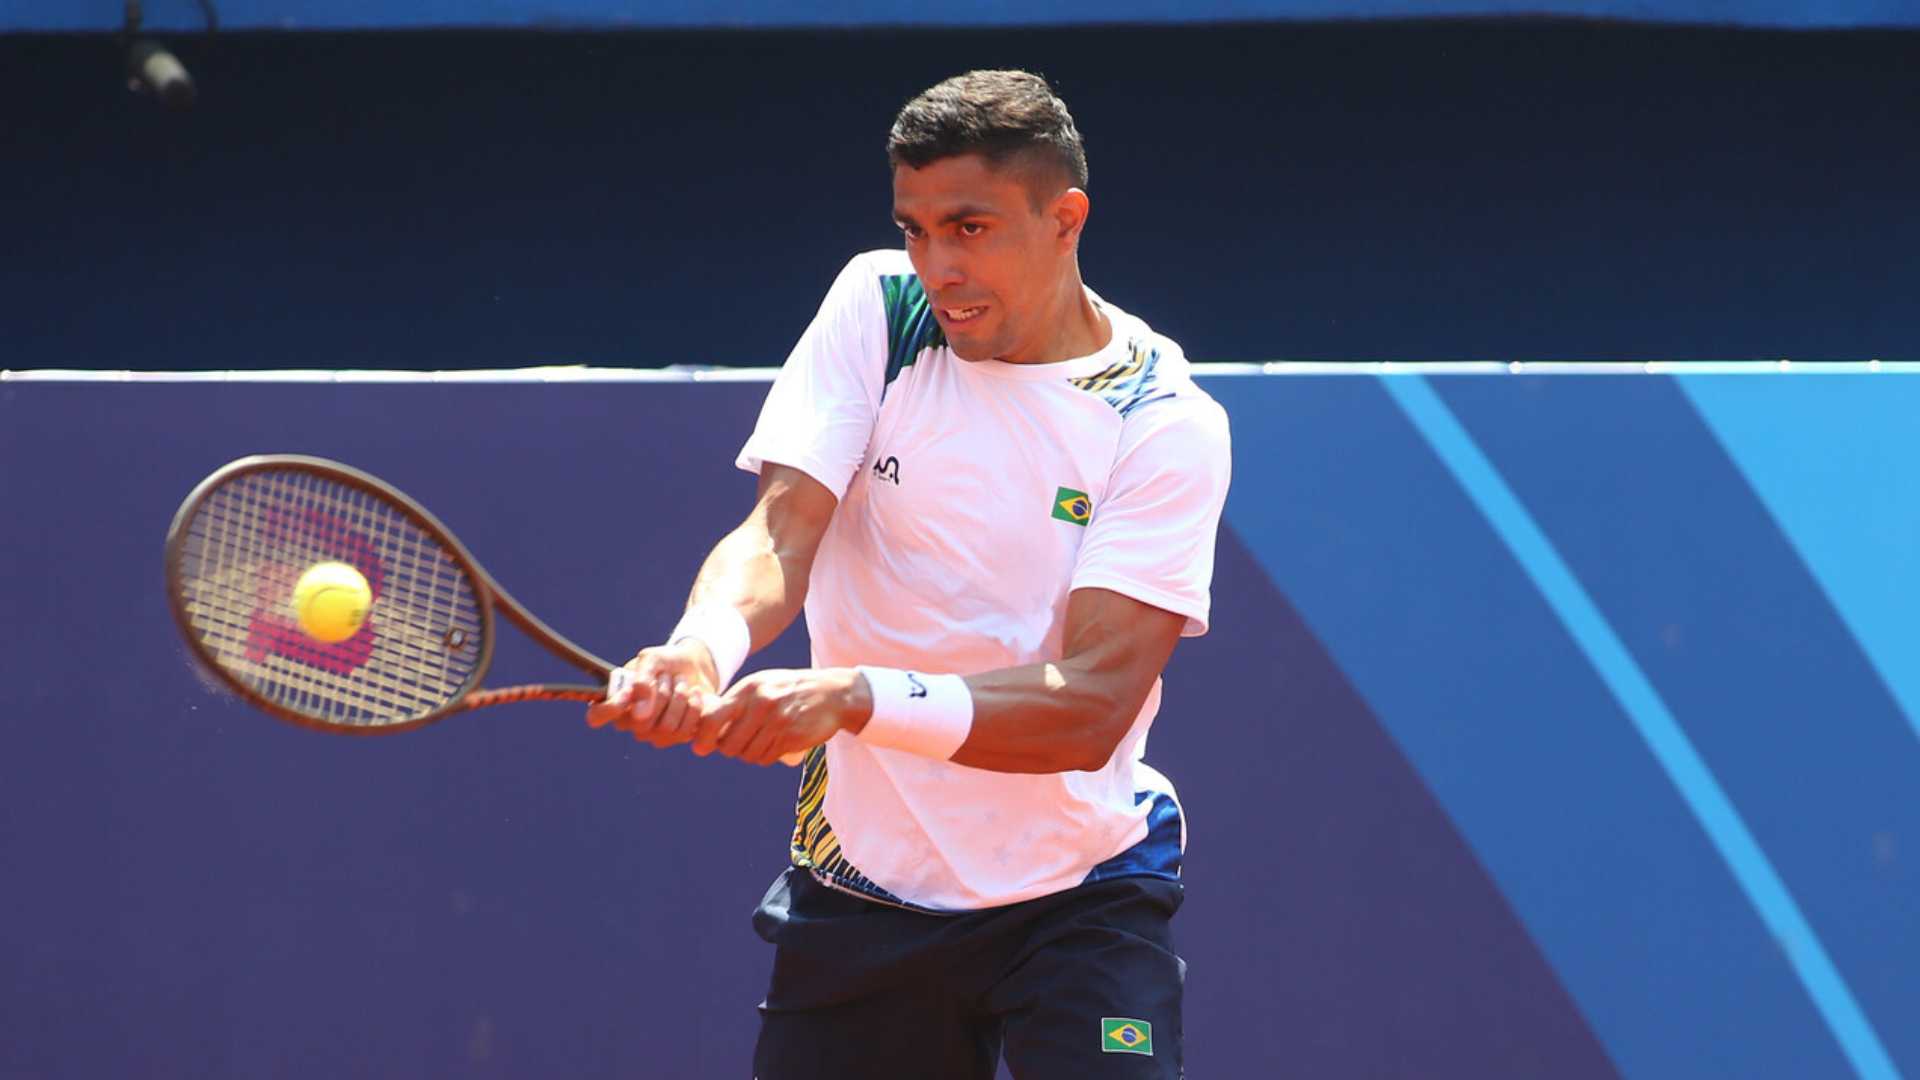 Tennis: Brazilian Thiago Monteiro defeats Peruvian Huertas del Pino in two sets